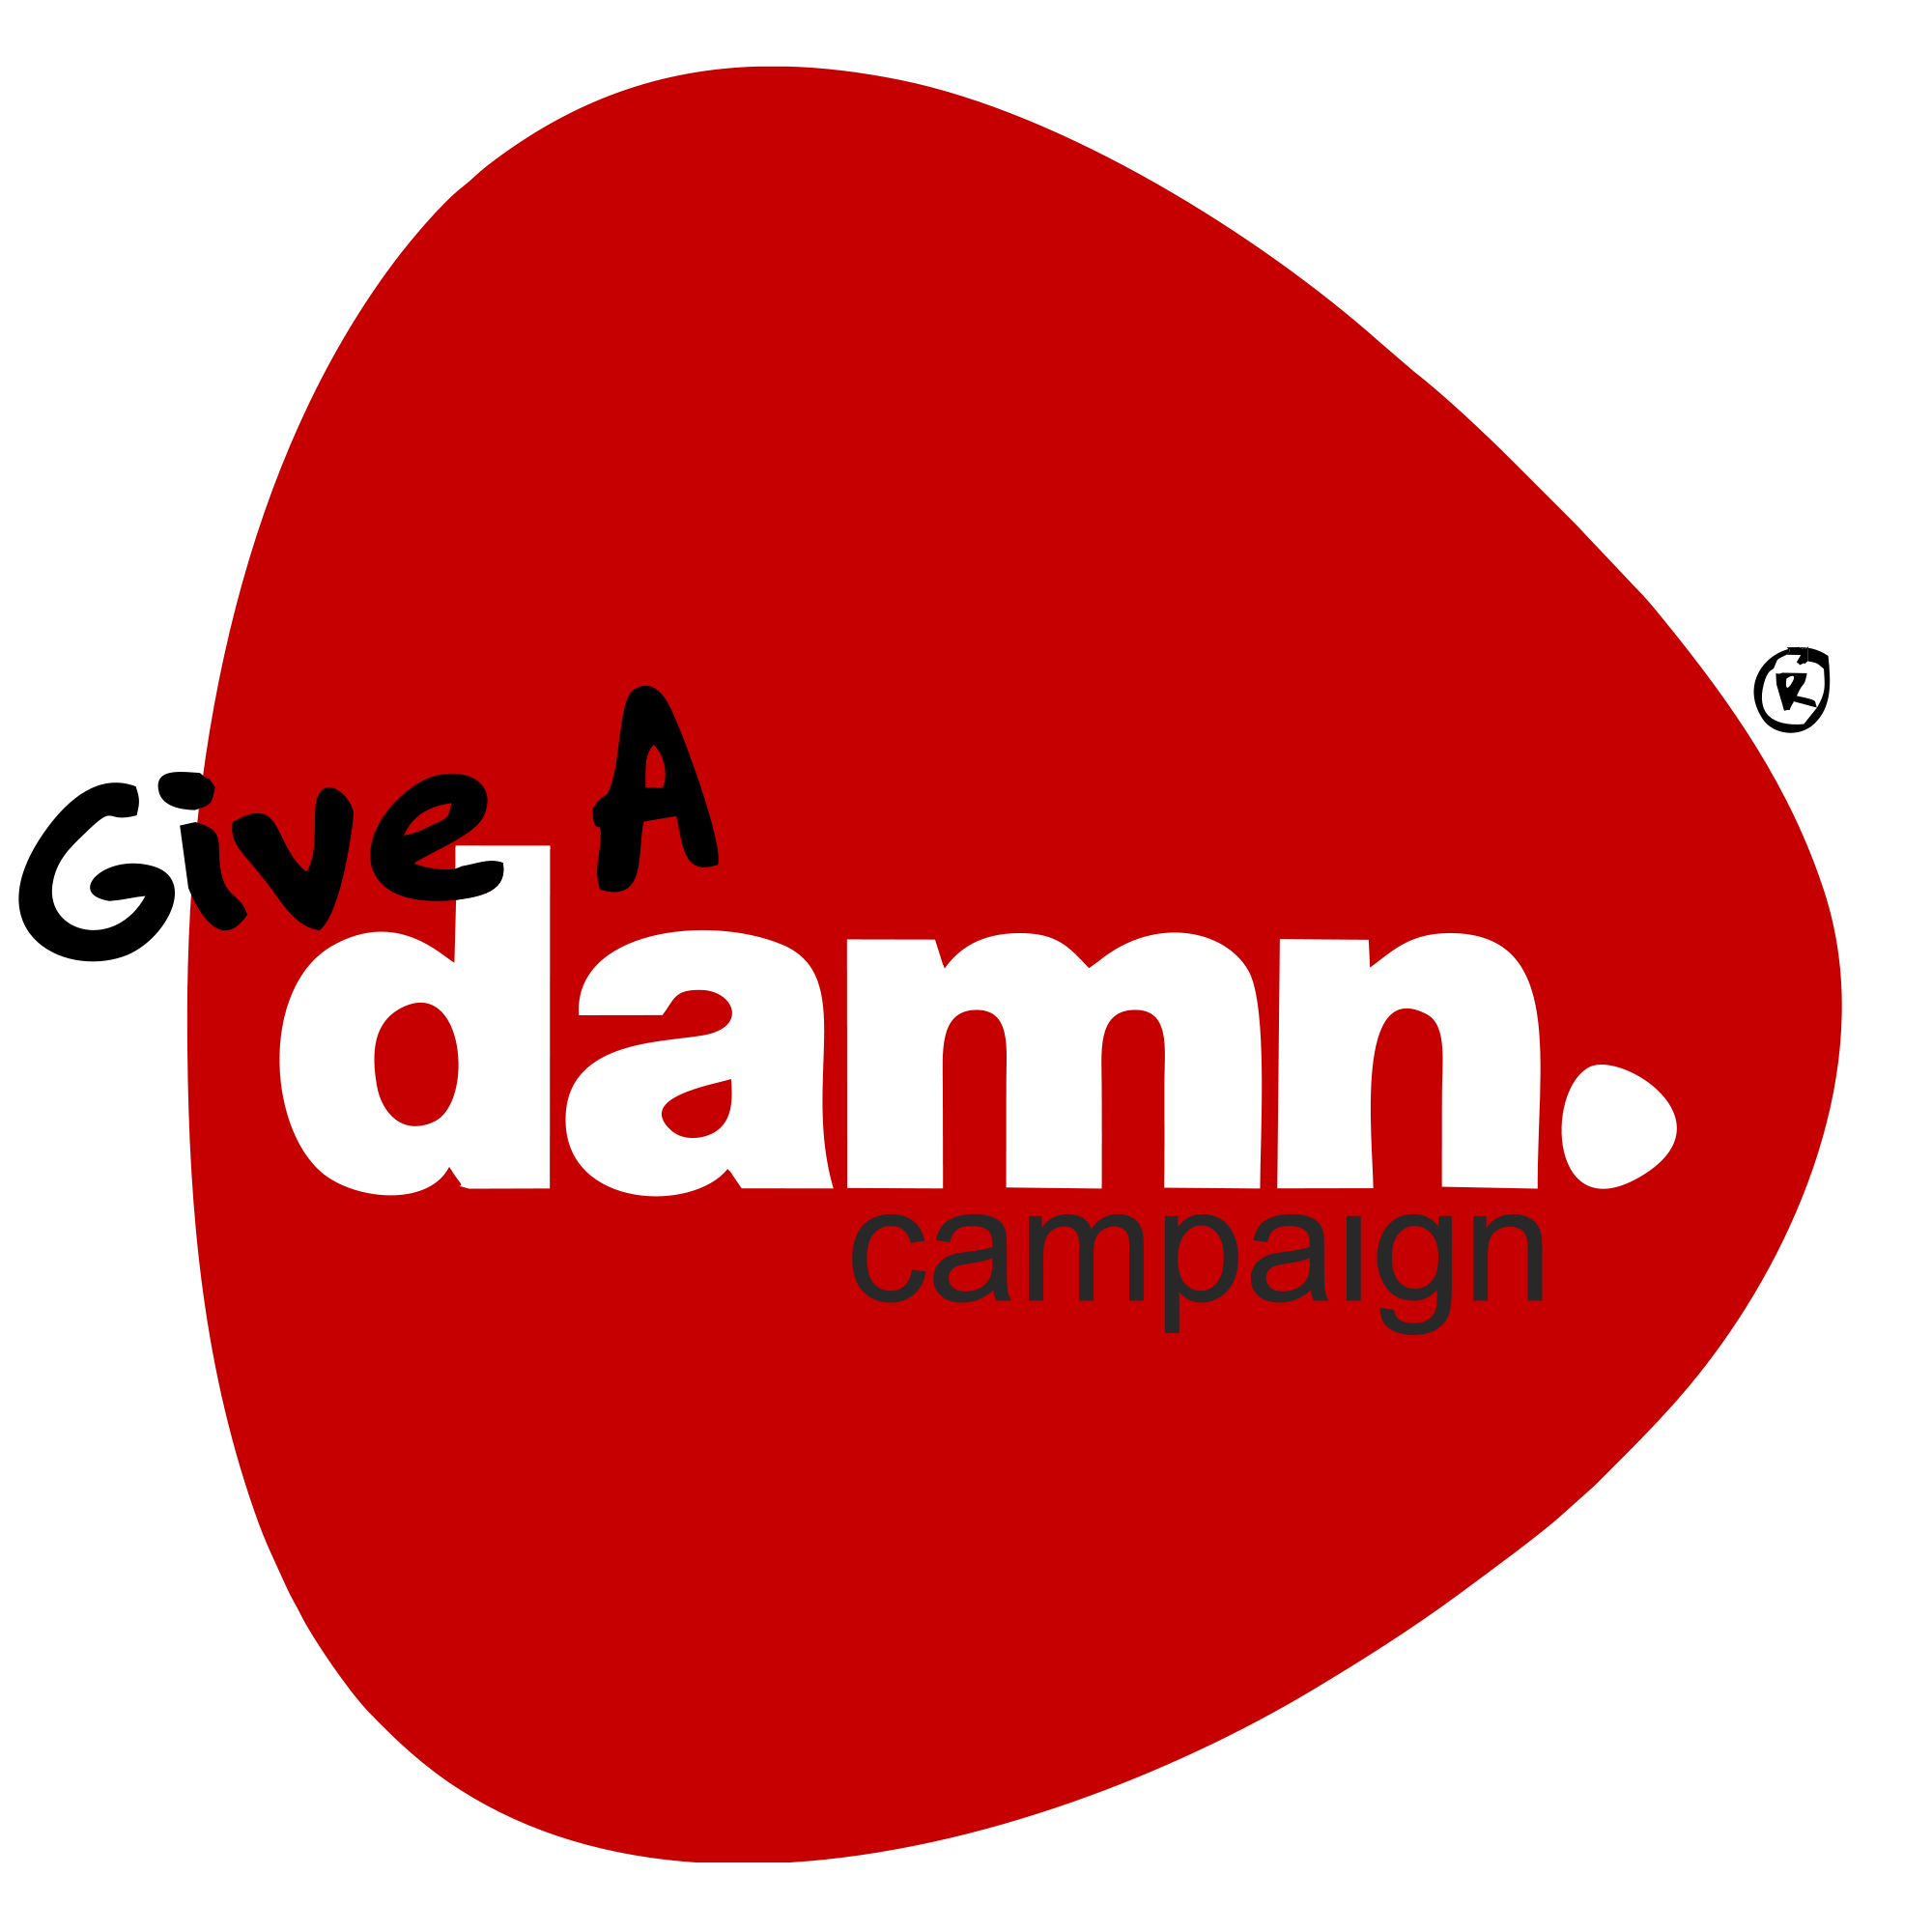 Damn Logo - File:Give a damn campaign logo.svg - Wikimedia Commons